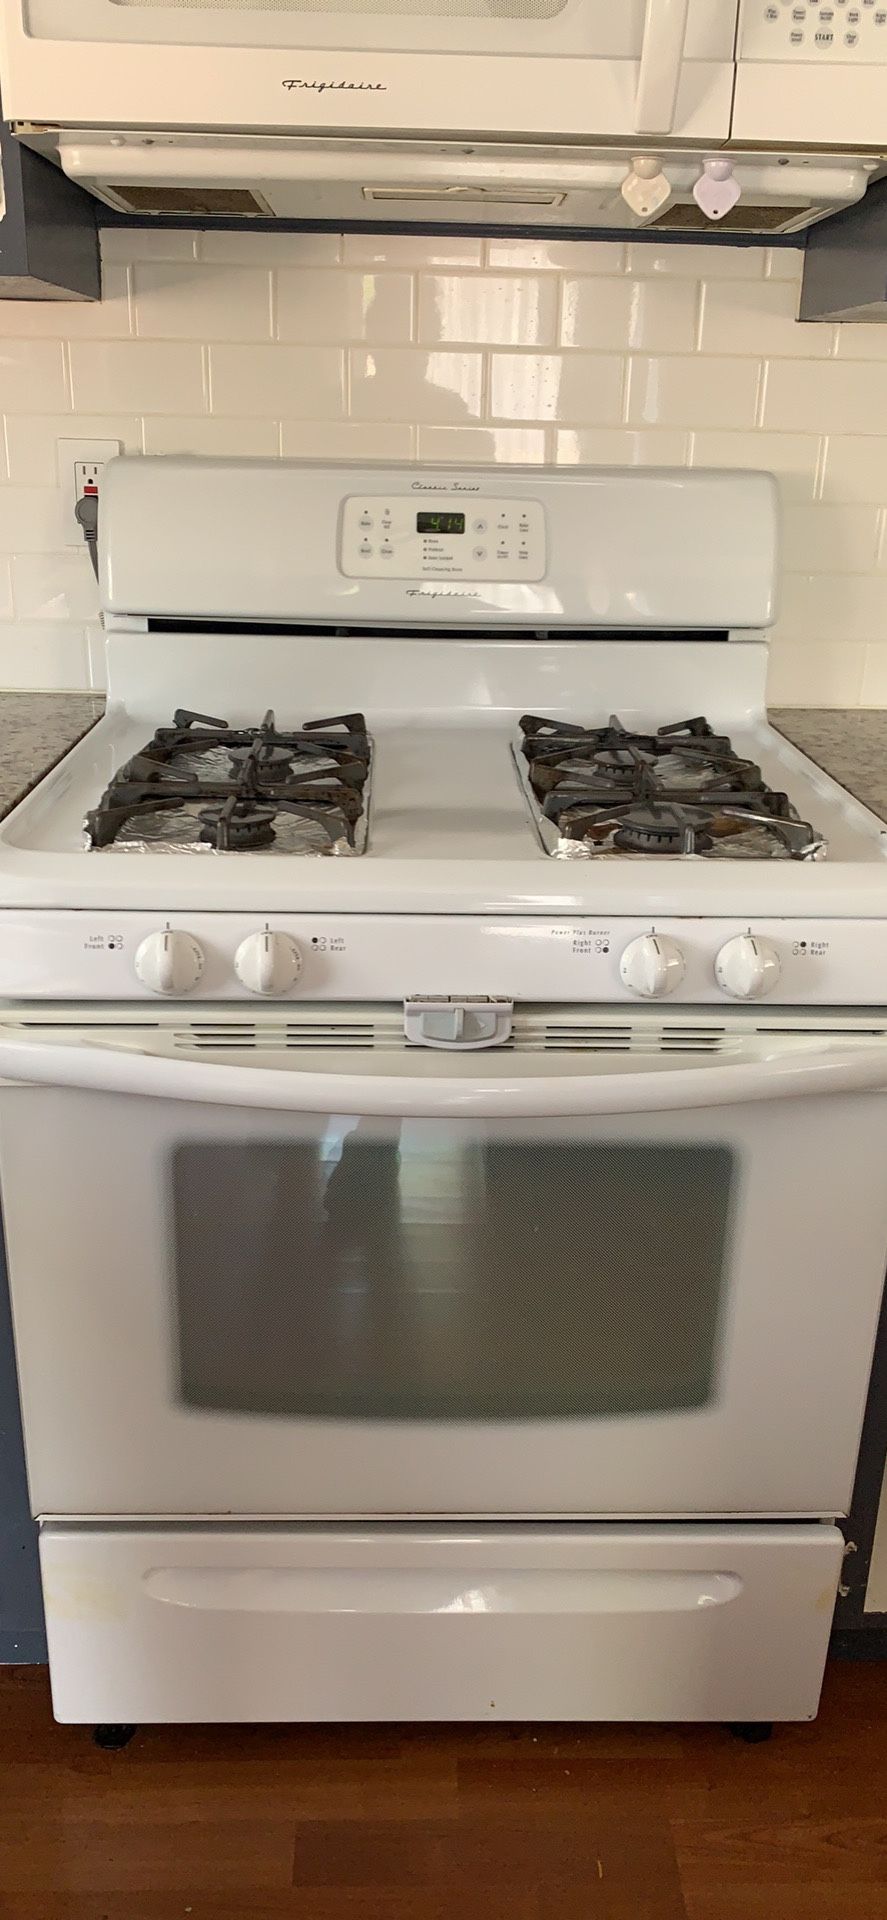 Appliances white gas stove overhead microwave fan.